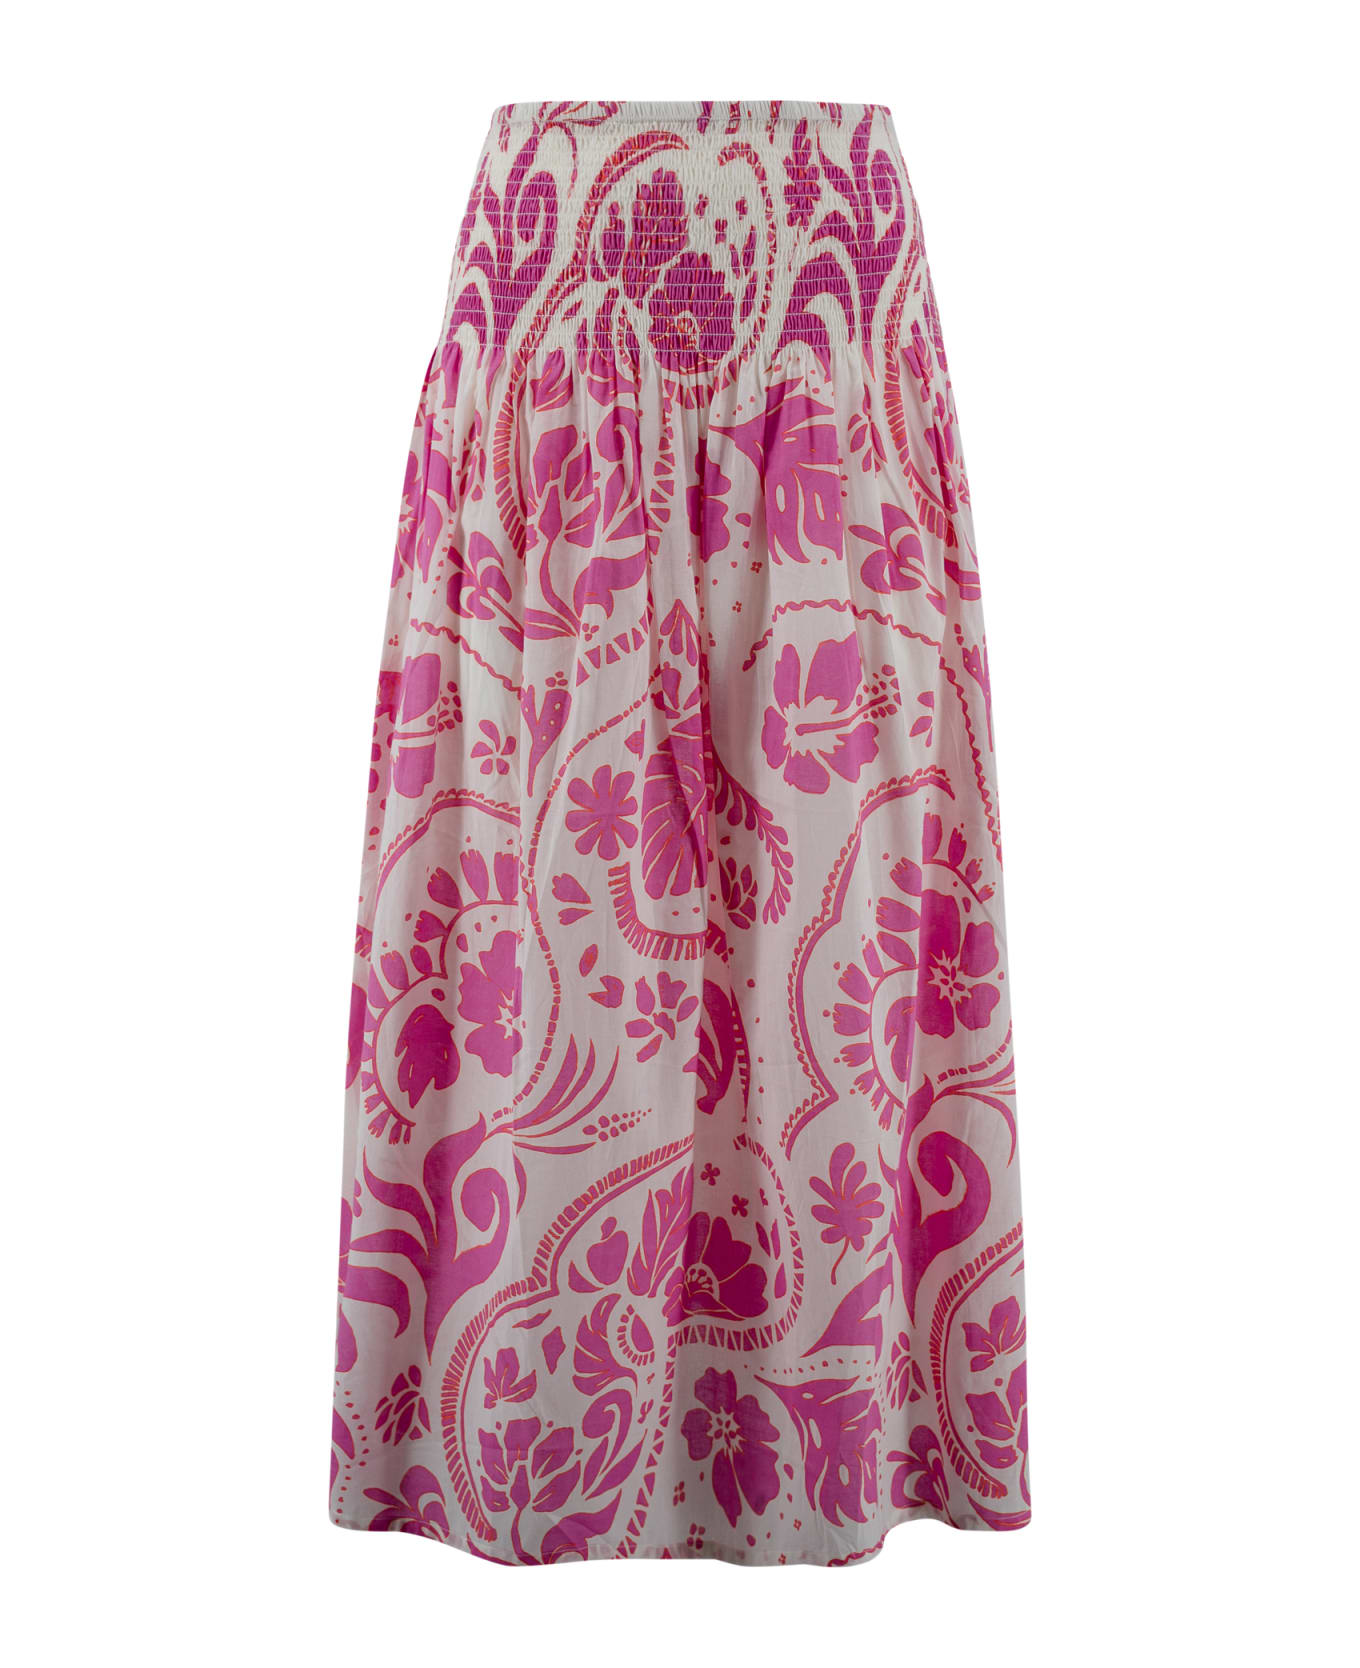 Surkana Long Skirt With Elastic Gathers At The Waist - Fuchsia スカート